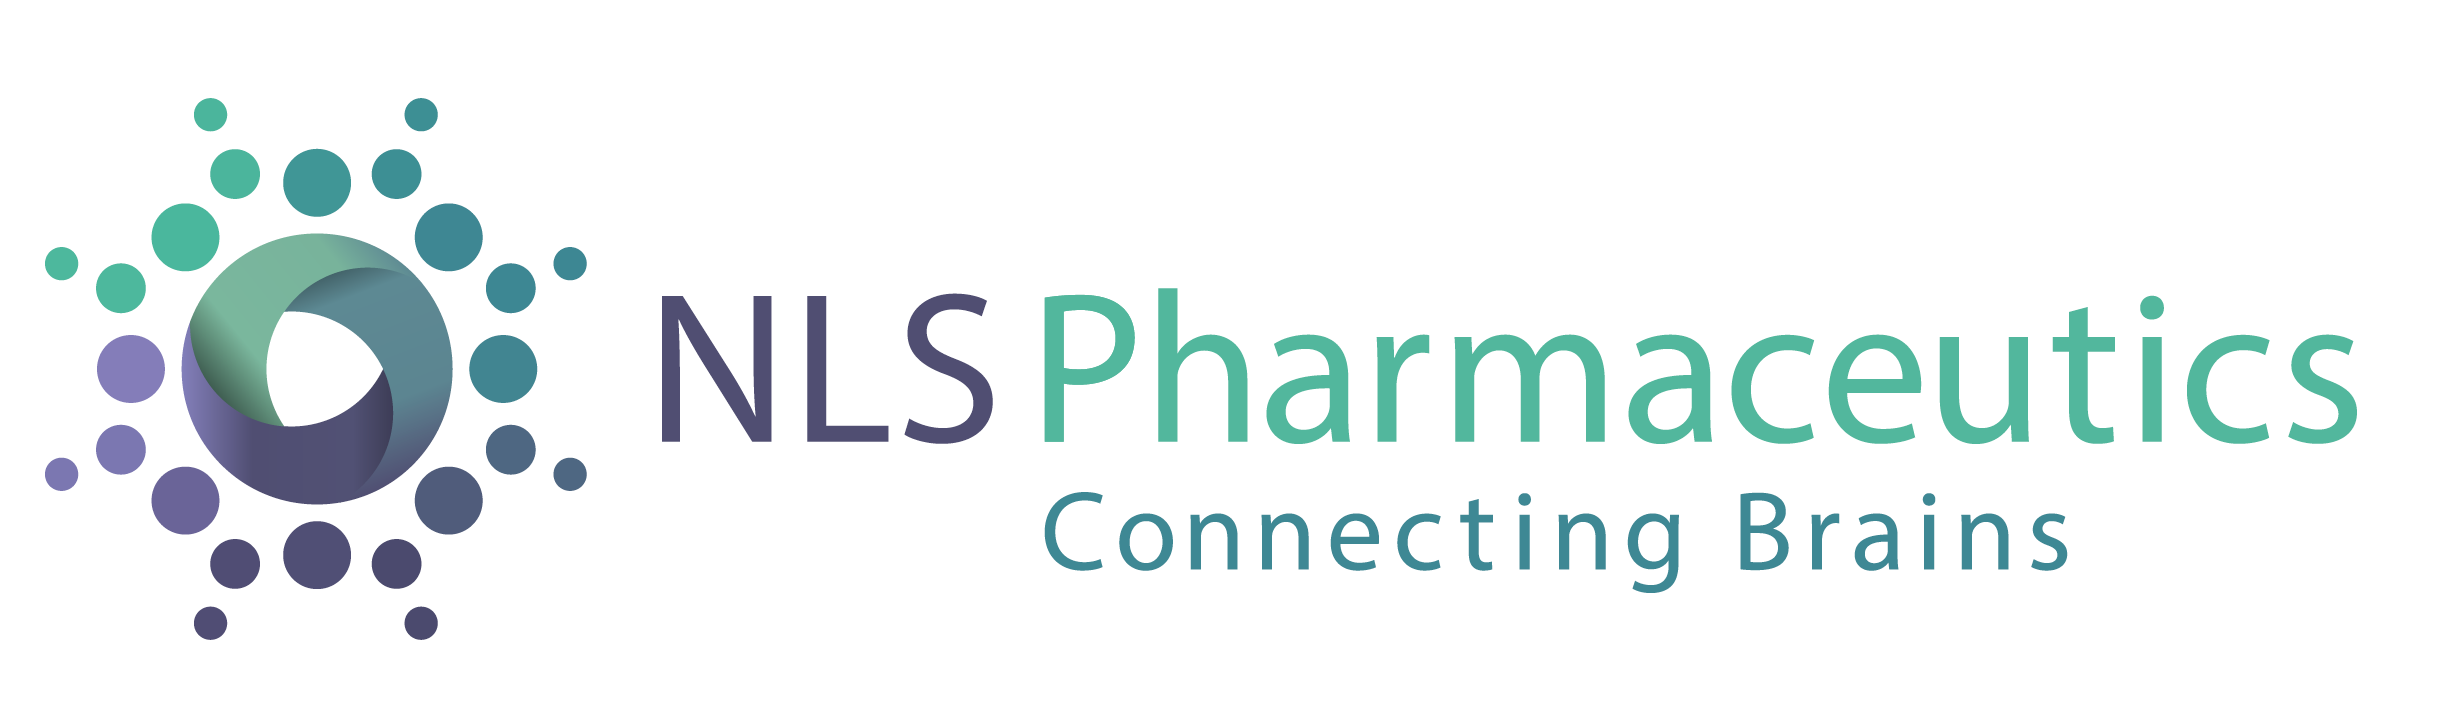 NLS Pharmaceutics AG, Wednesday, December 7, 2022, Press release picture